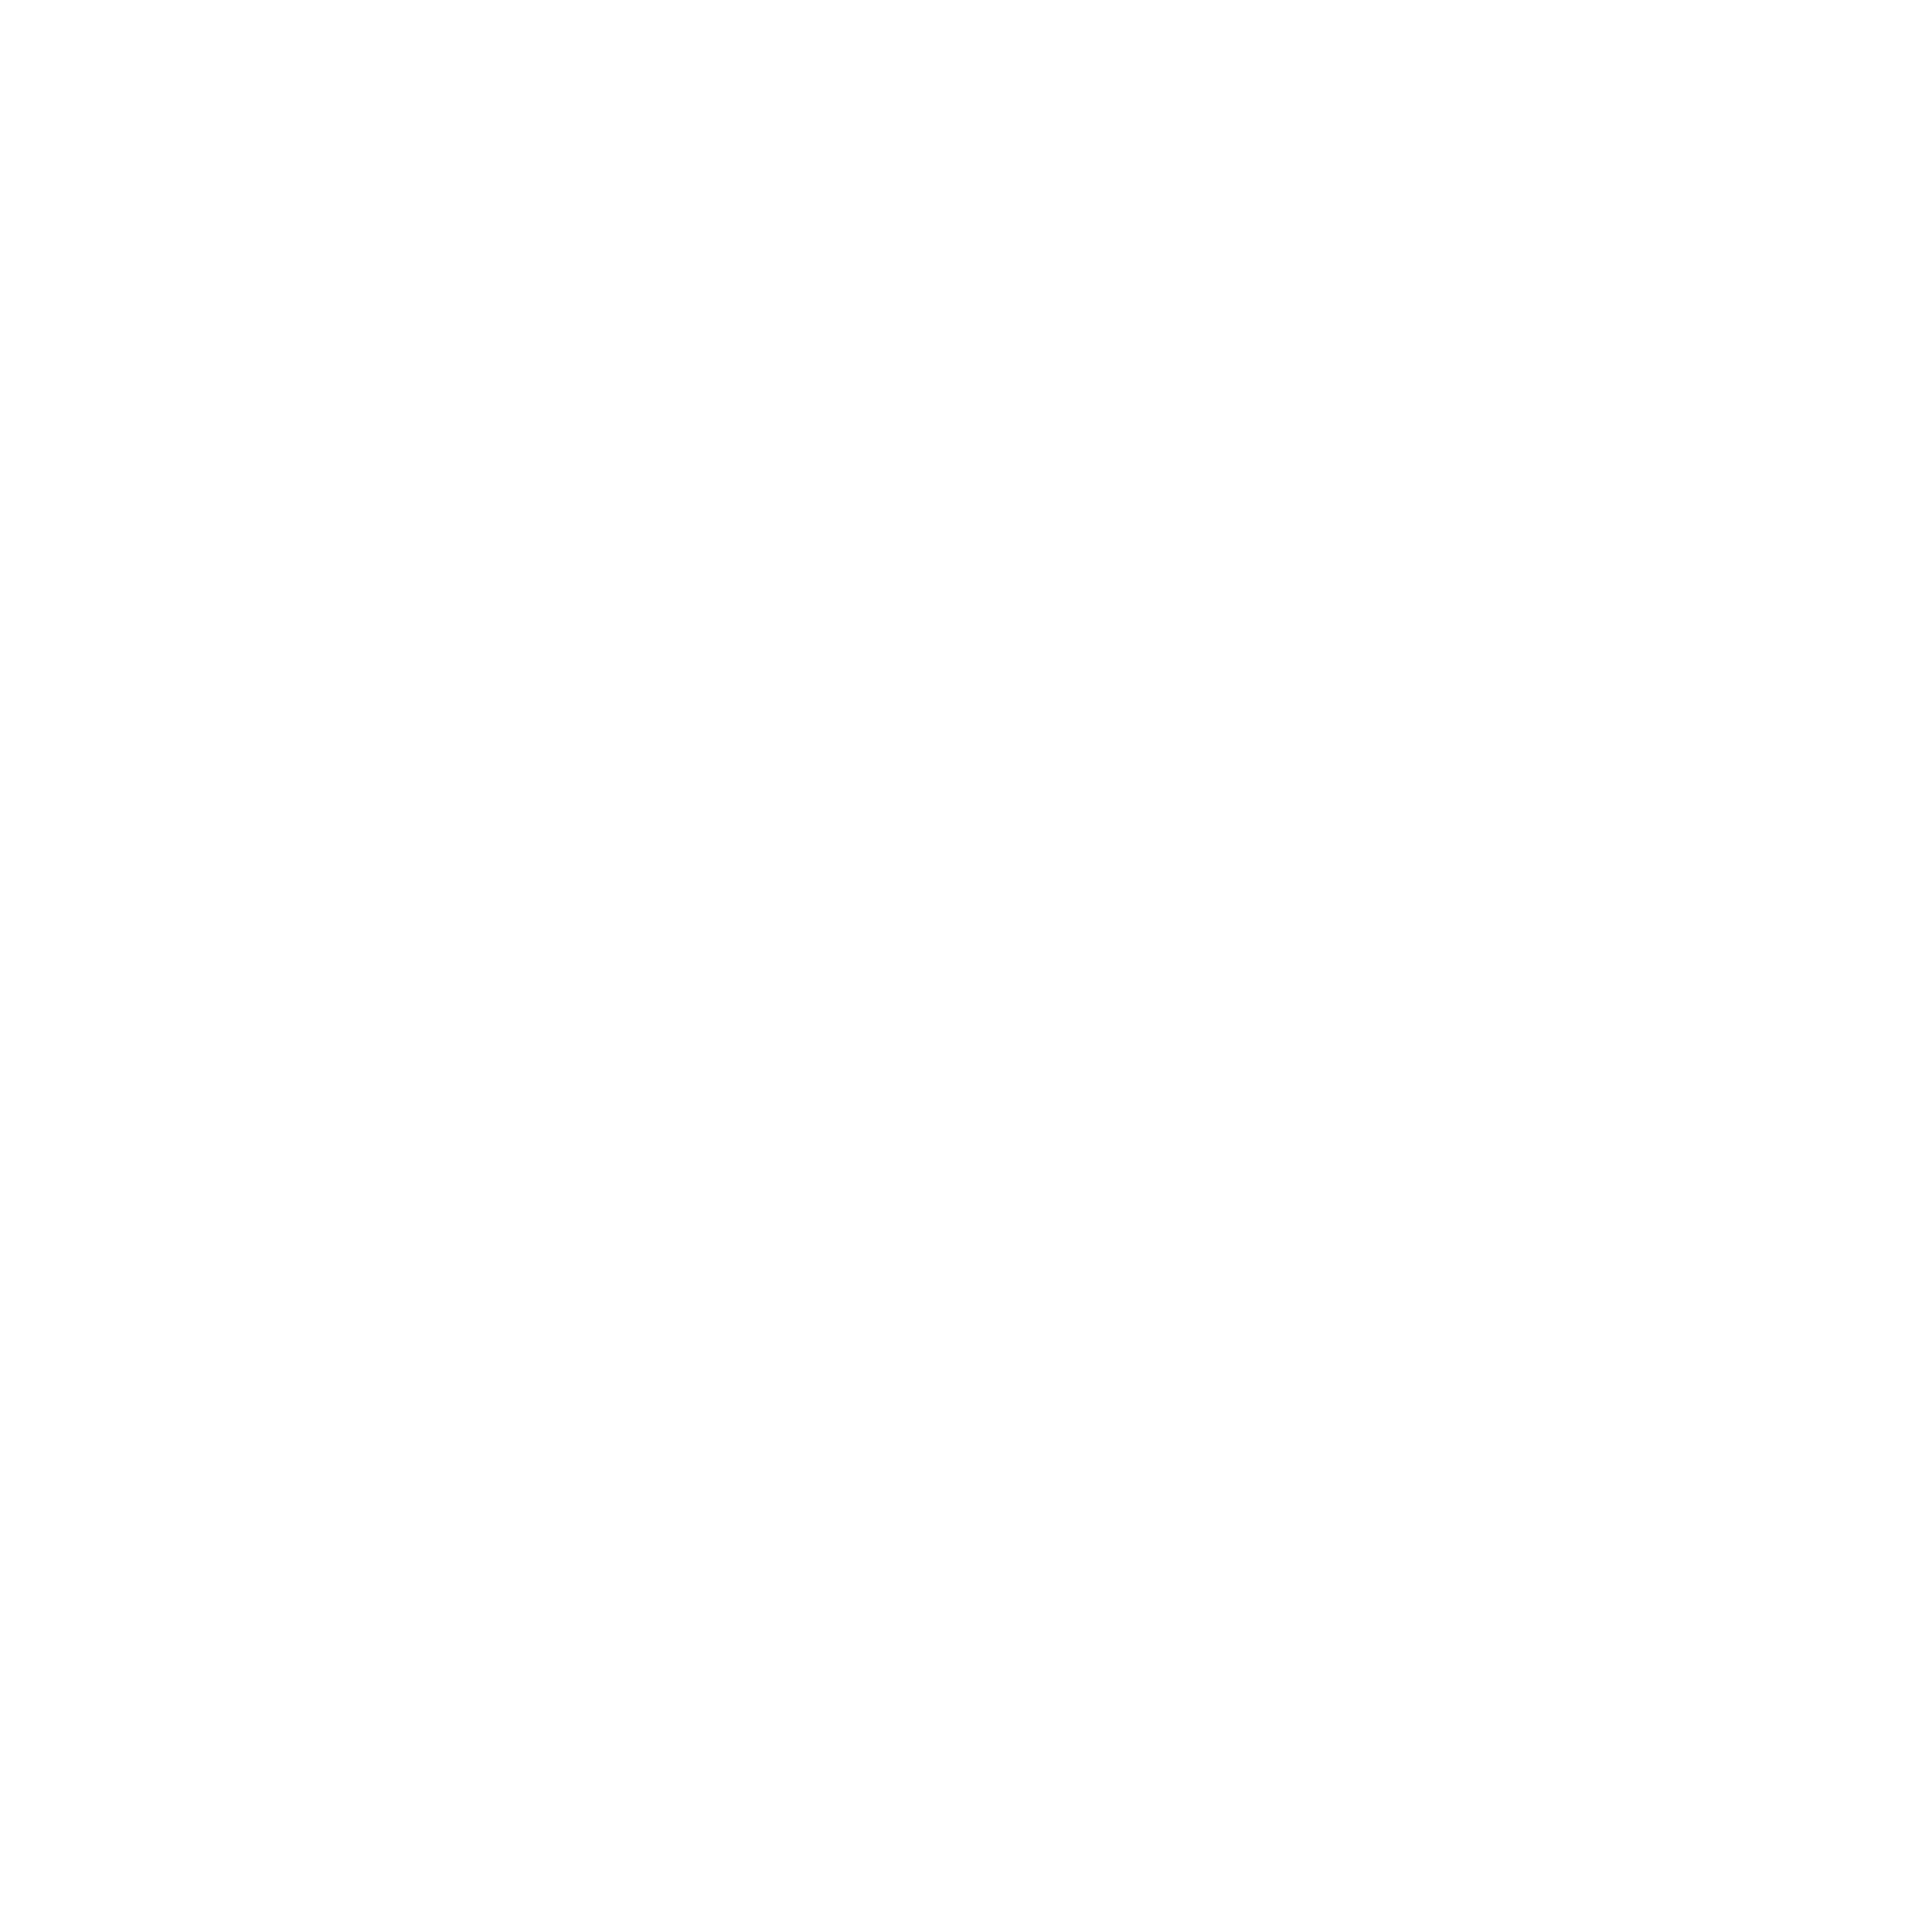 CHRYSLER-1.png